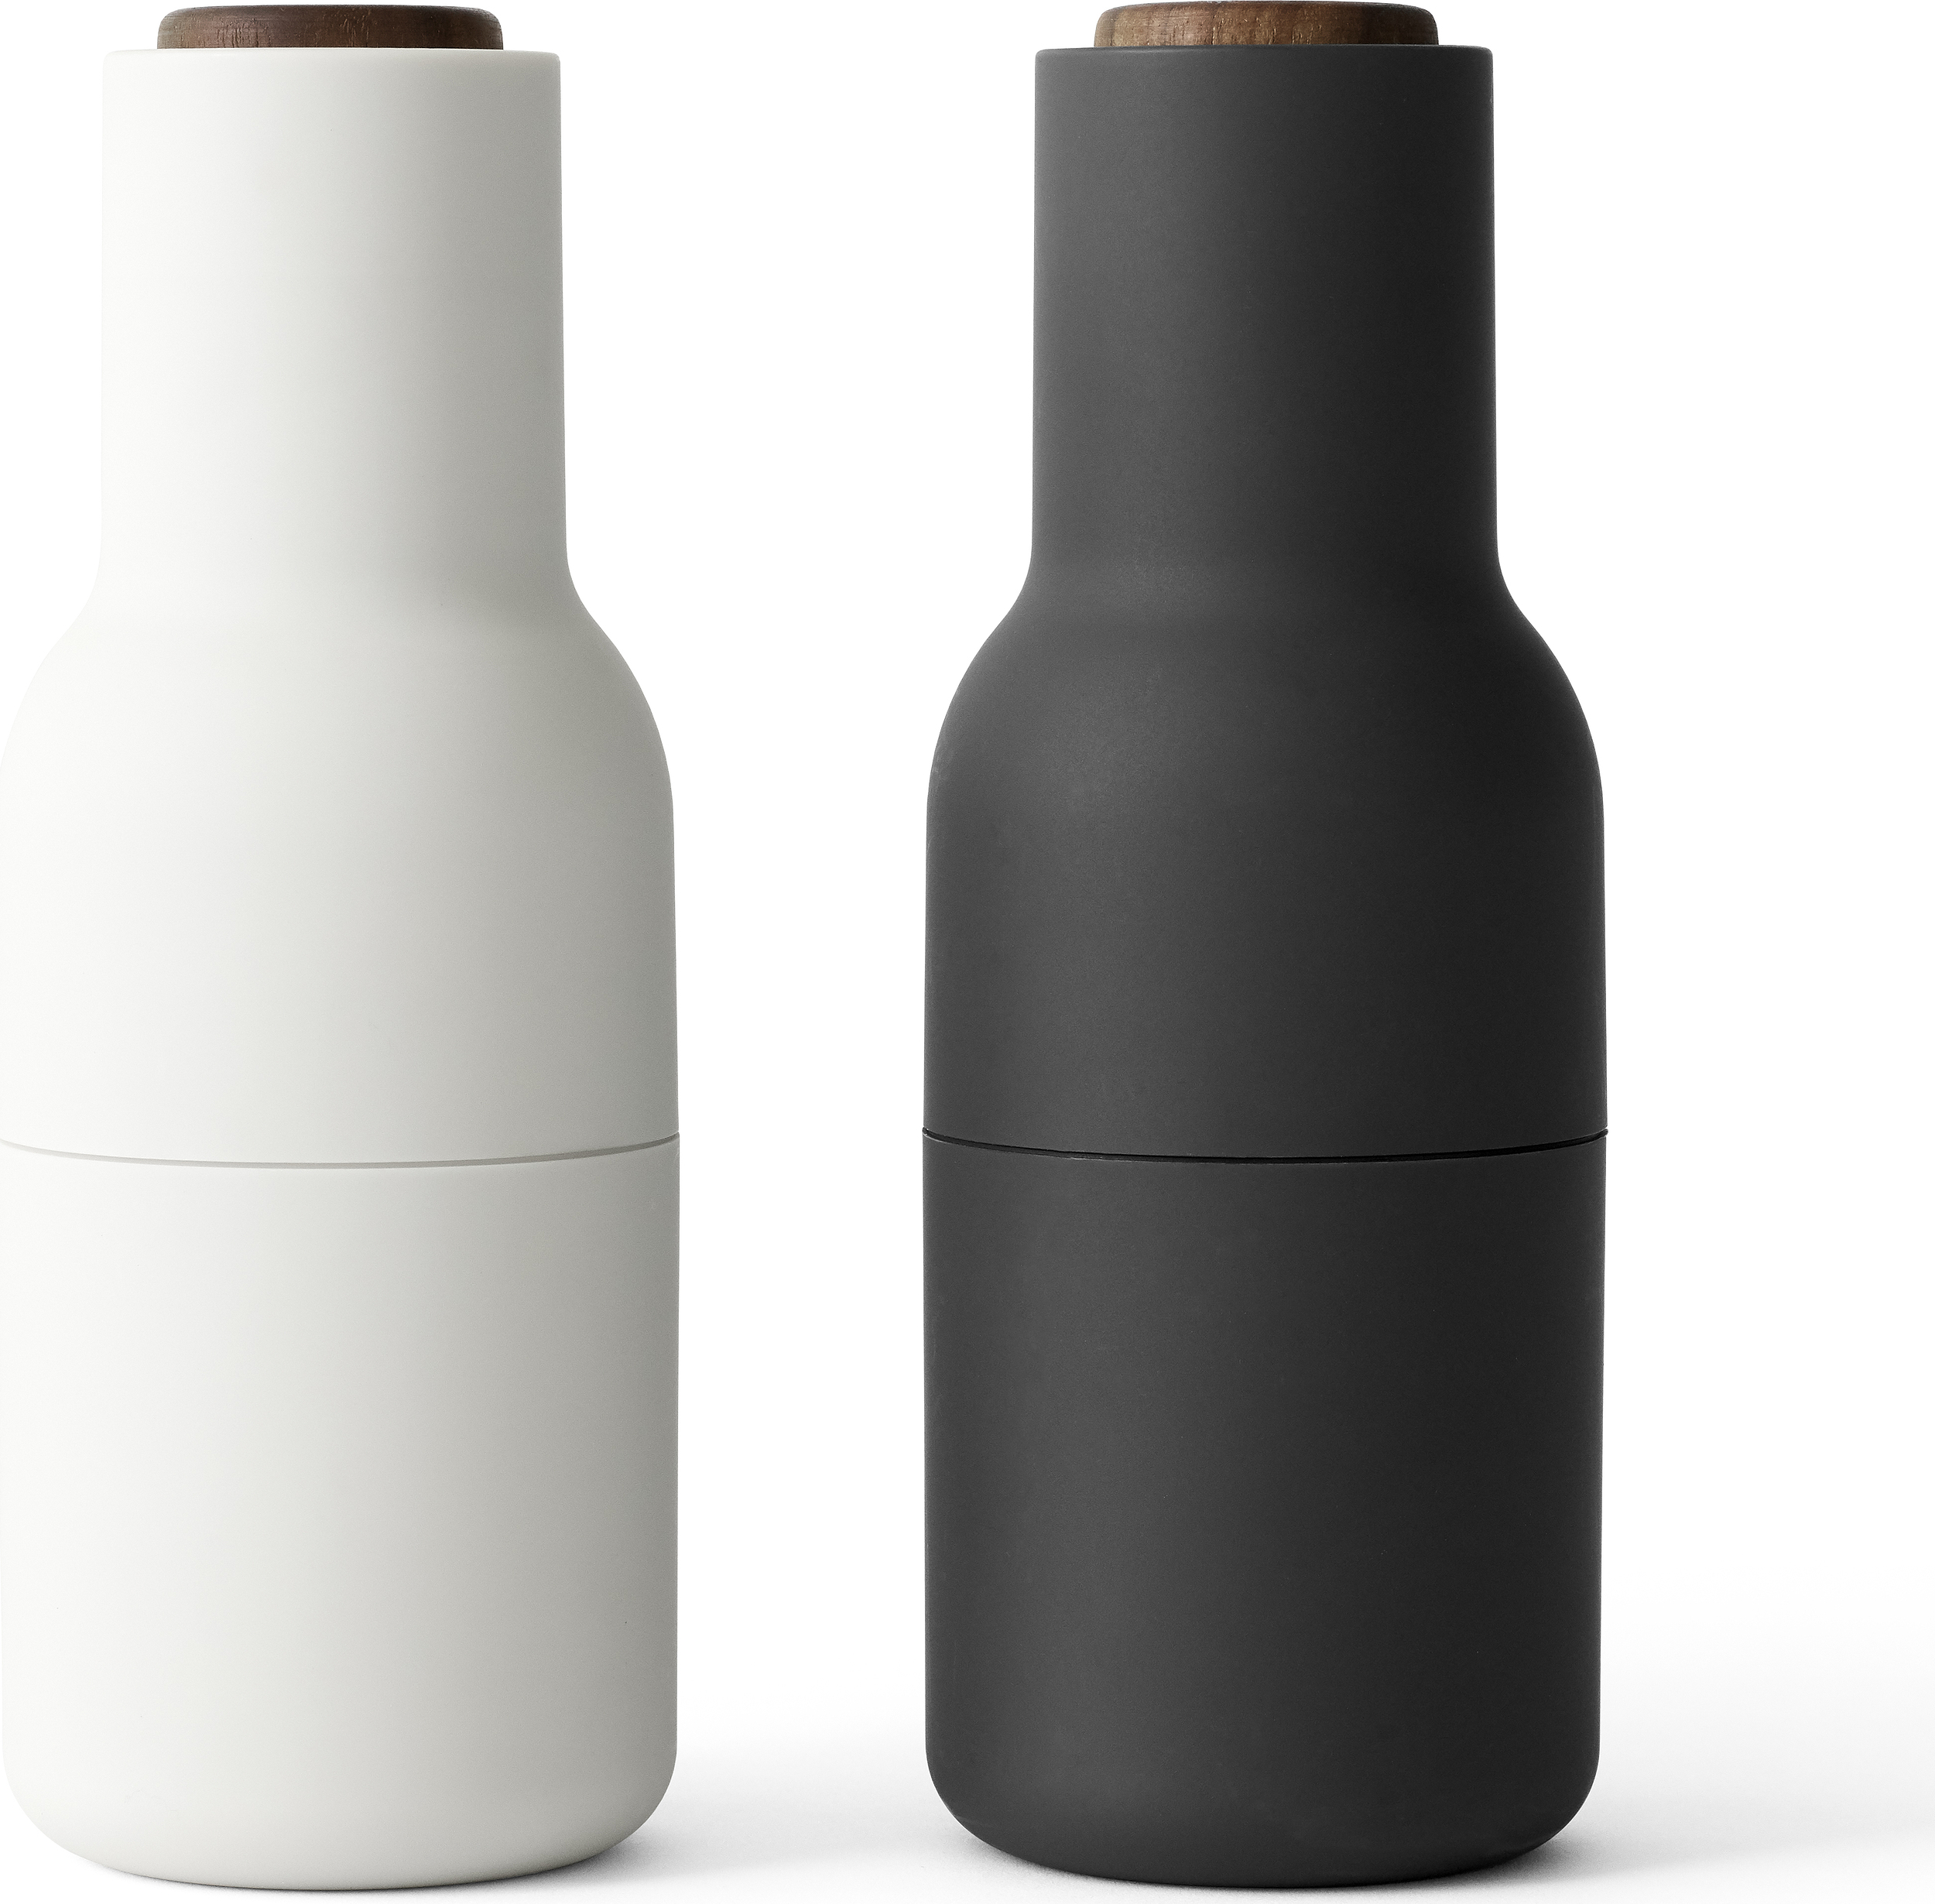 https://3fa-media.com/audo-copenhagen/audo-copenhagen-bottle-grinder-pepper-salt-or-spice-grinders-beige-and-dark-grey-2-pcs__108195_8eddcbc-s2500x2500.jpg